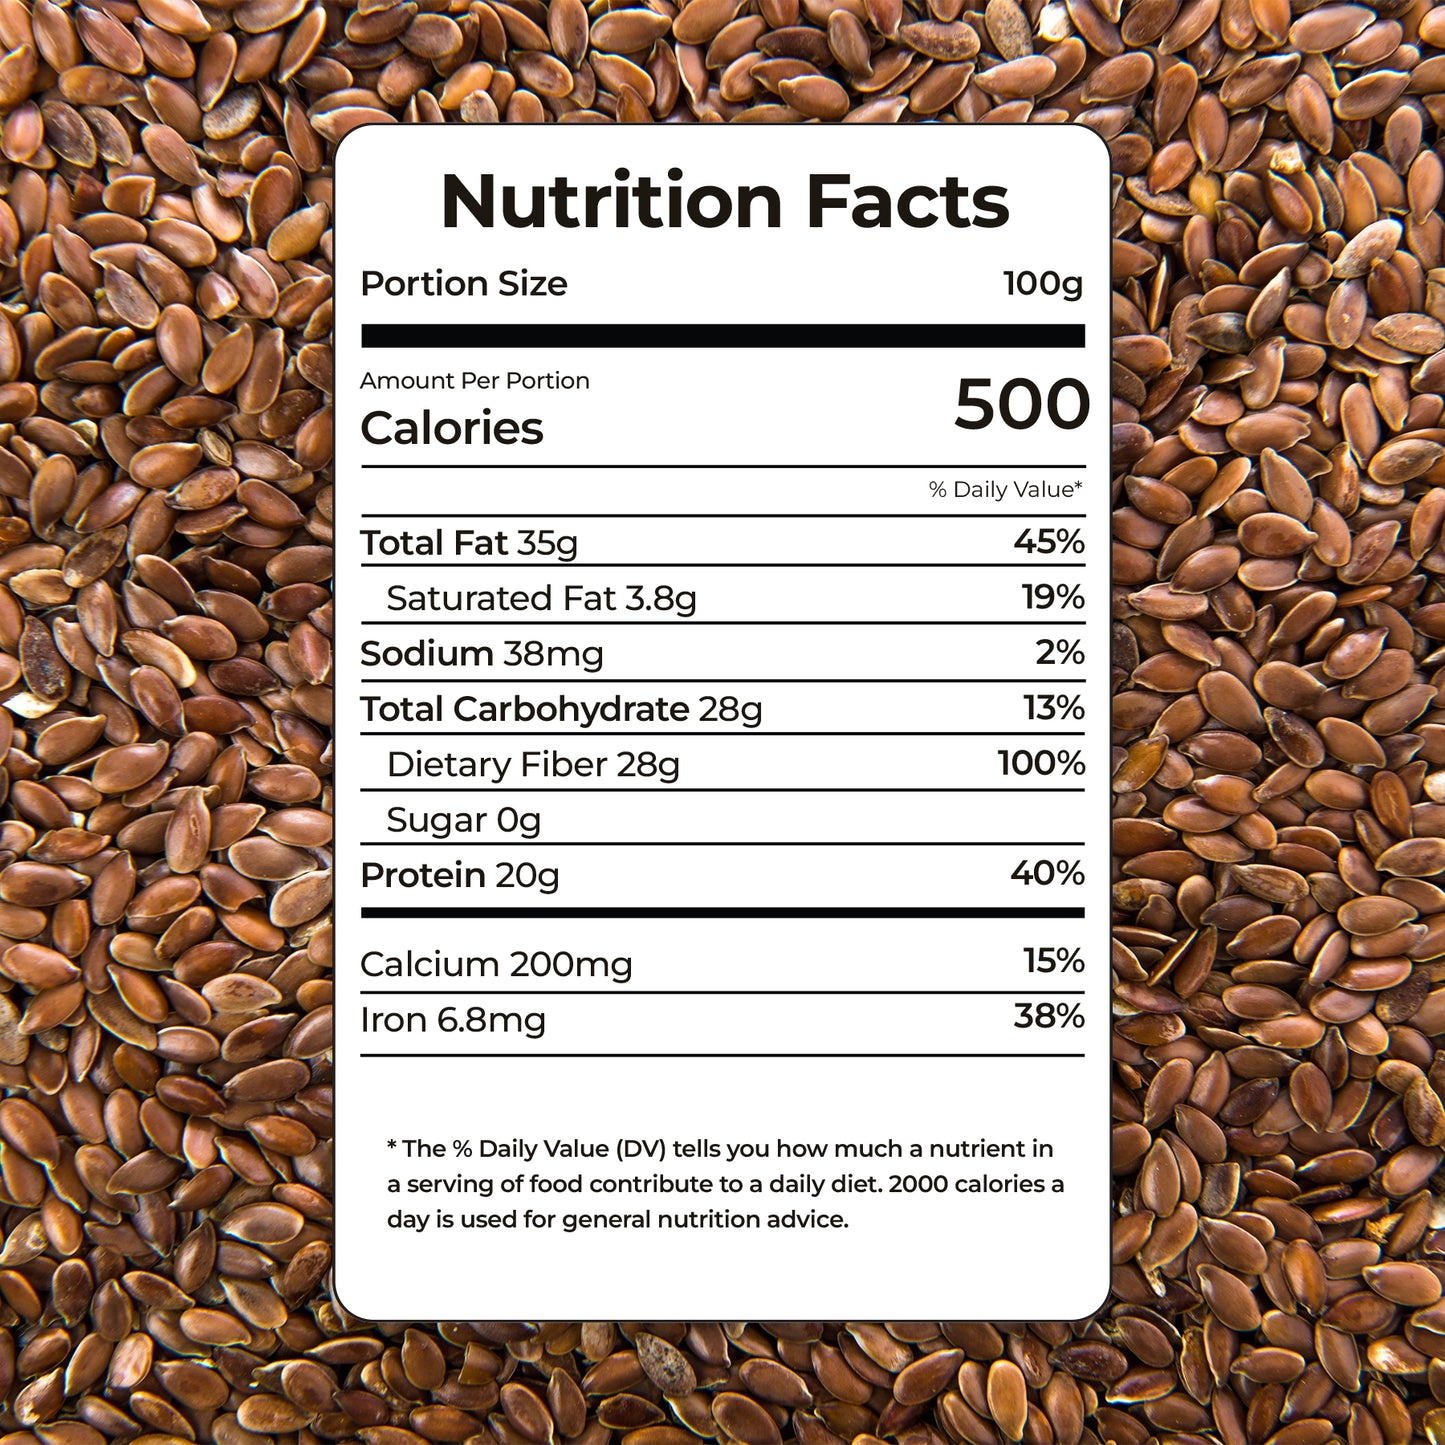 Roasted Flax Seeds - Nutrient Powerhouse for Wellness